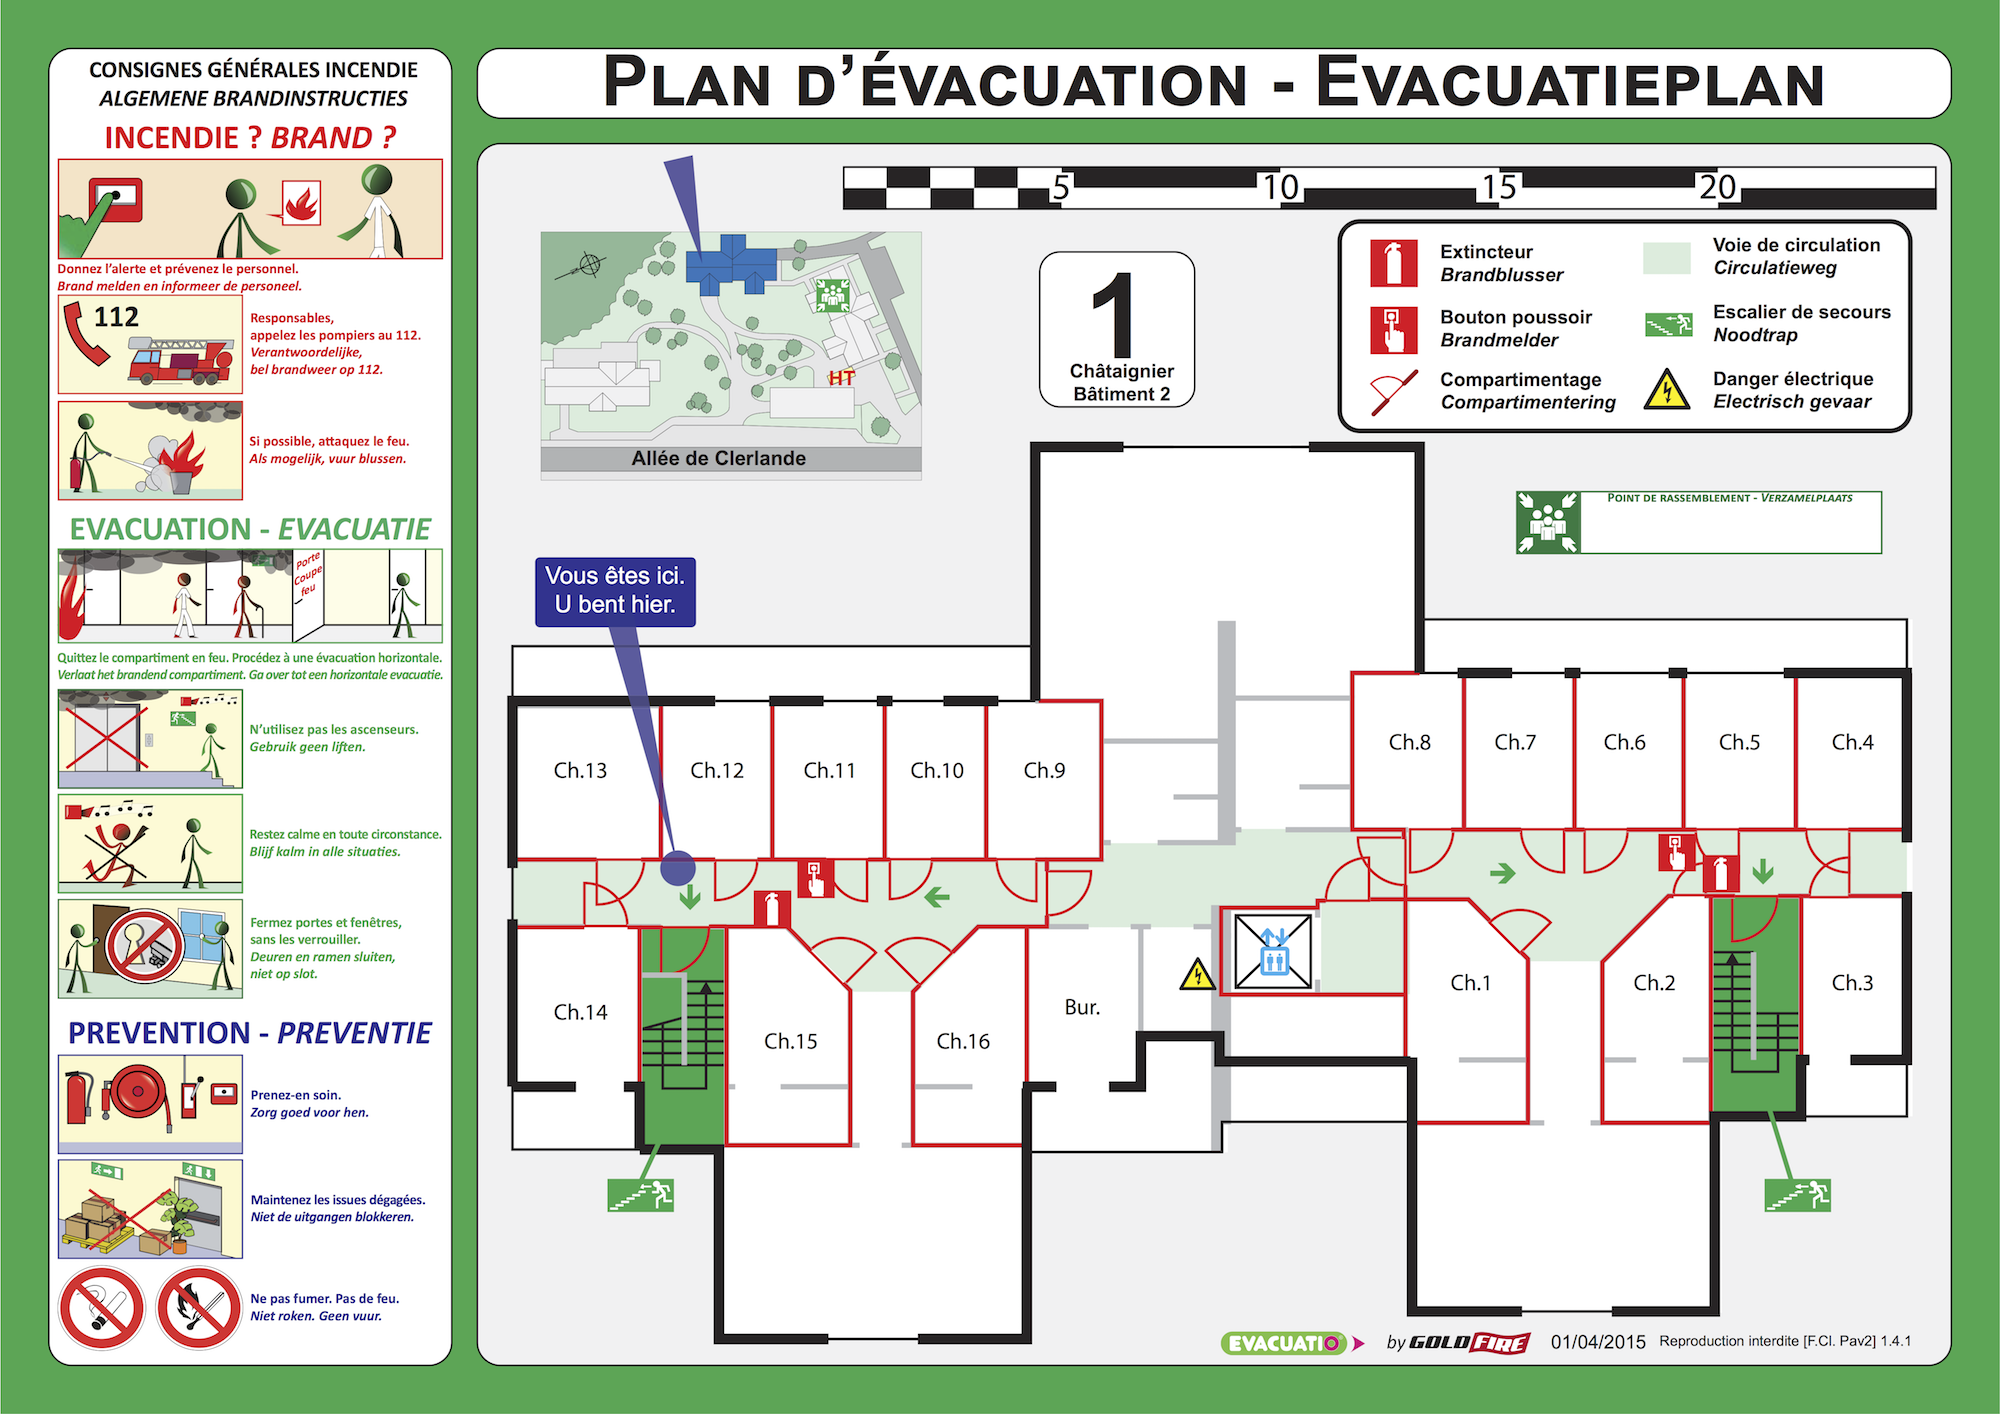 Hospital evacuation plan